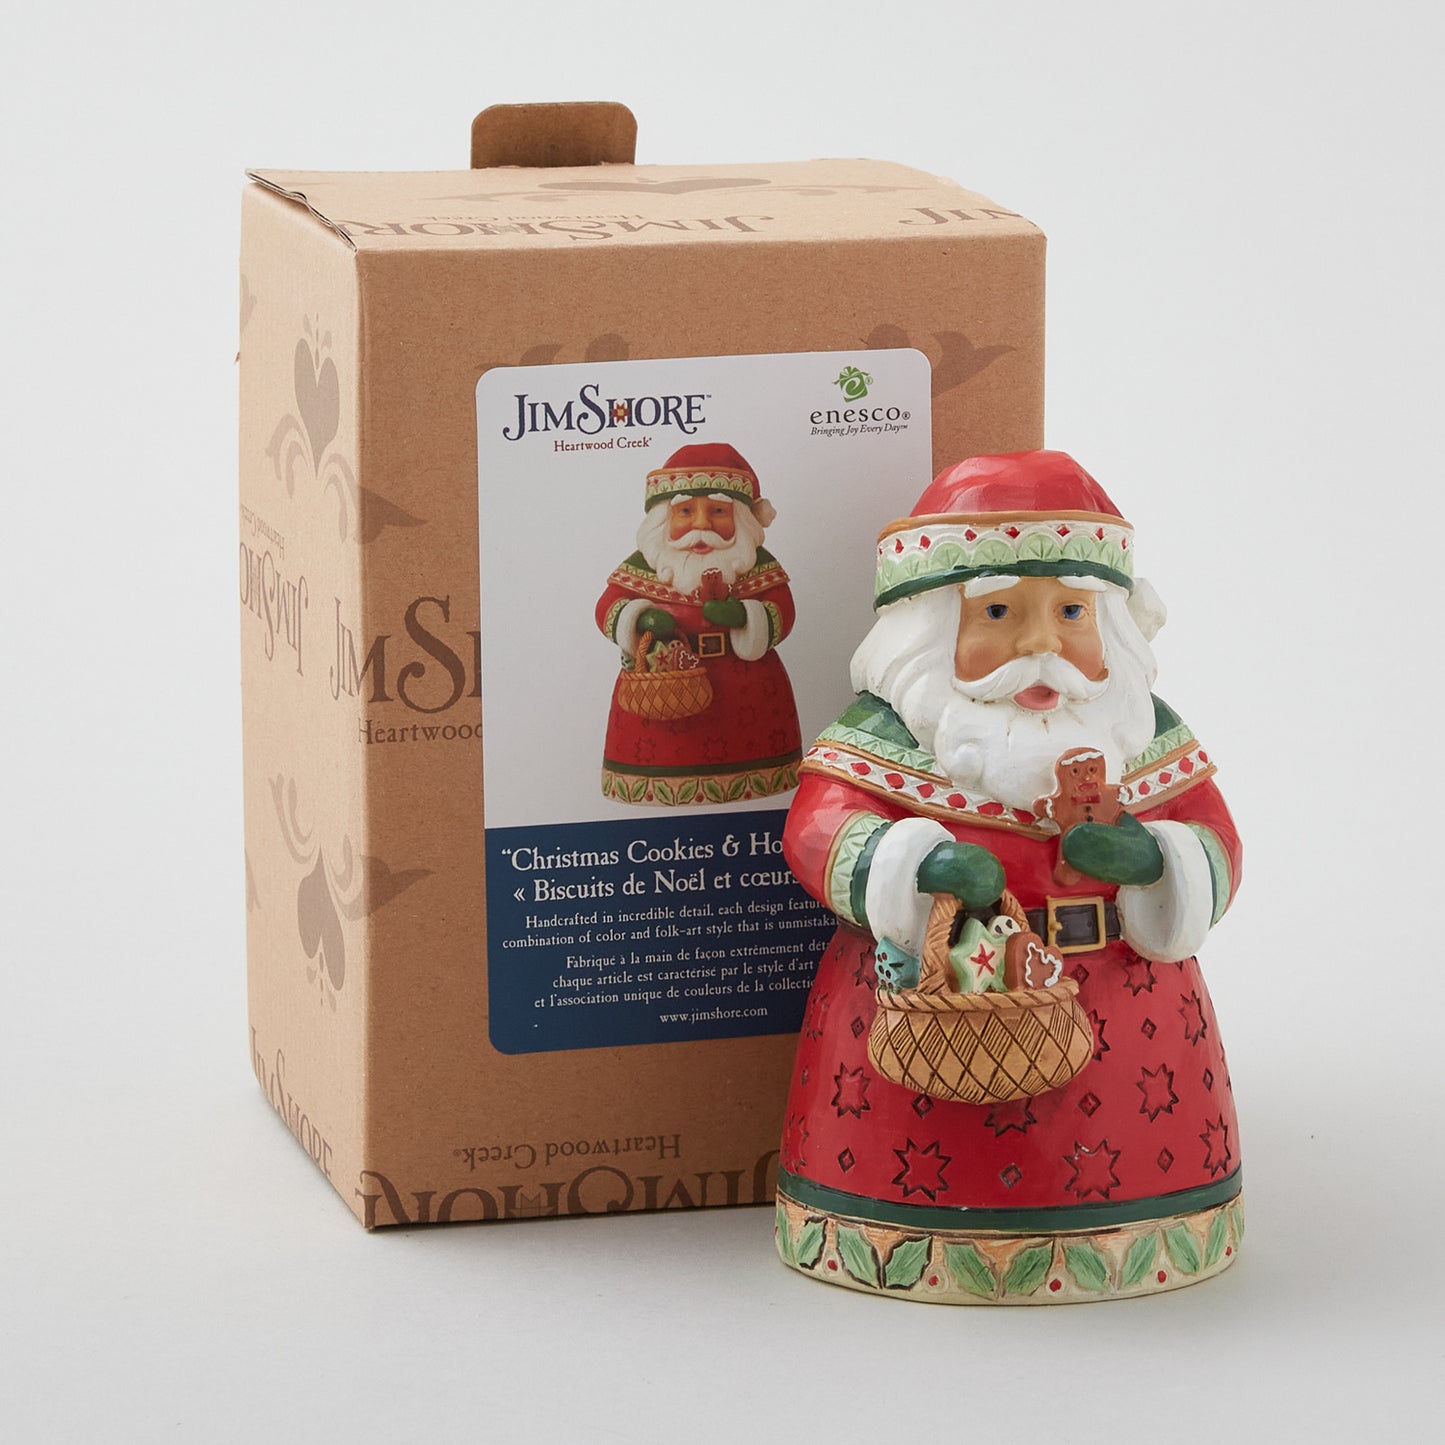 Jim Shore Heartwood Creek Pint Sized Santa with Cookies Figurine Alternative View #1